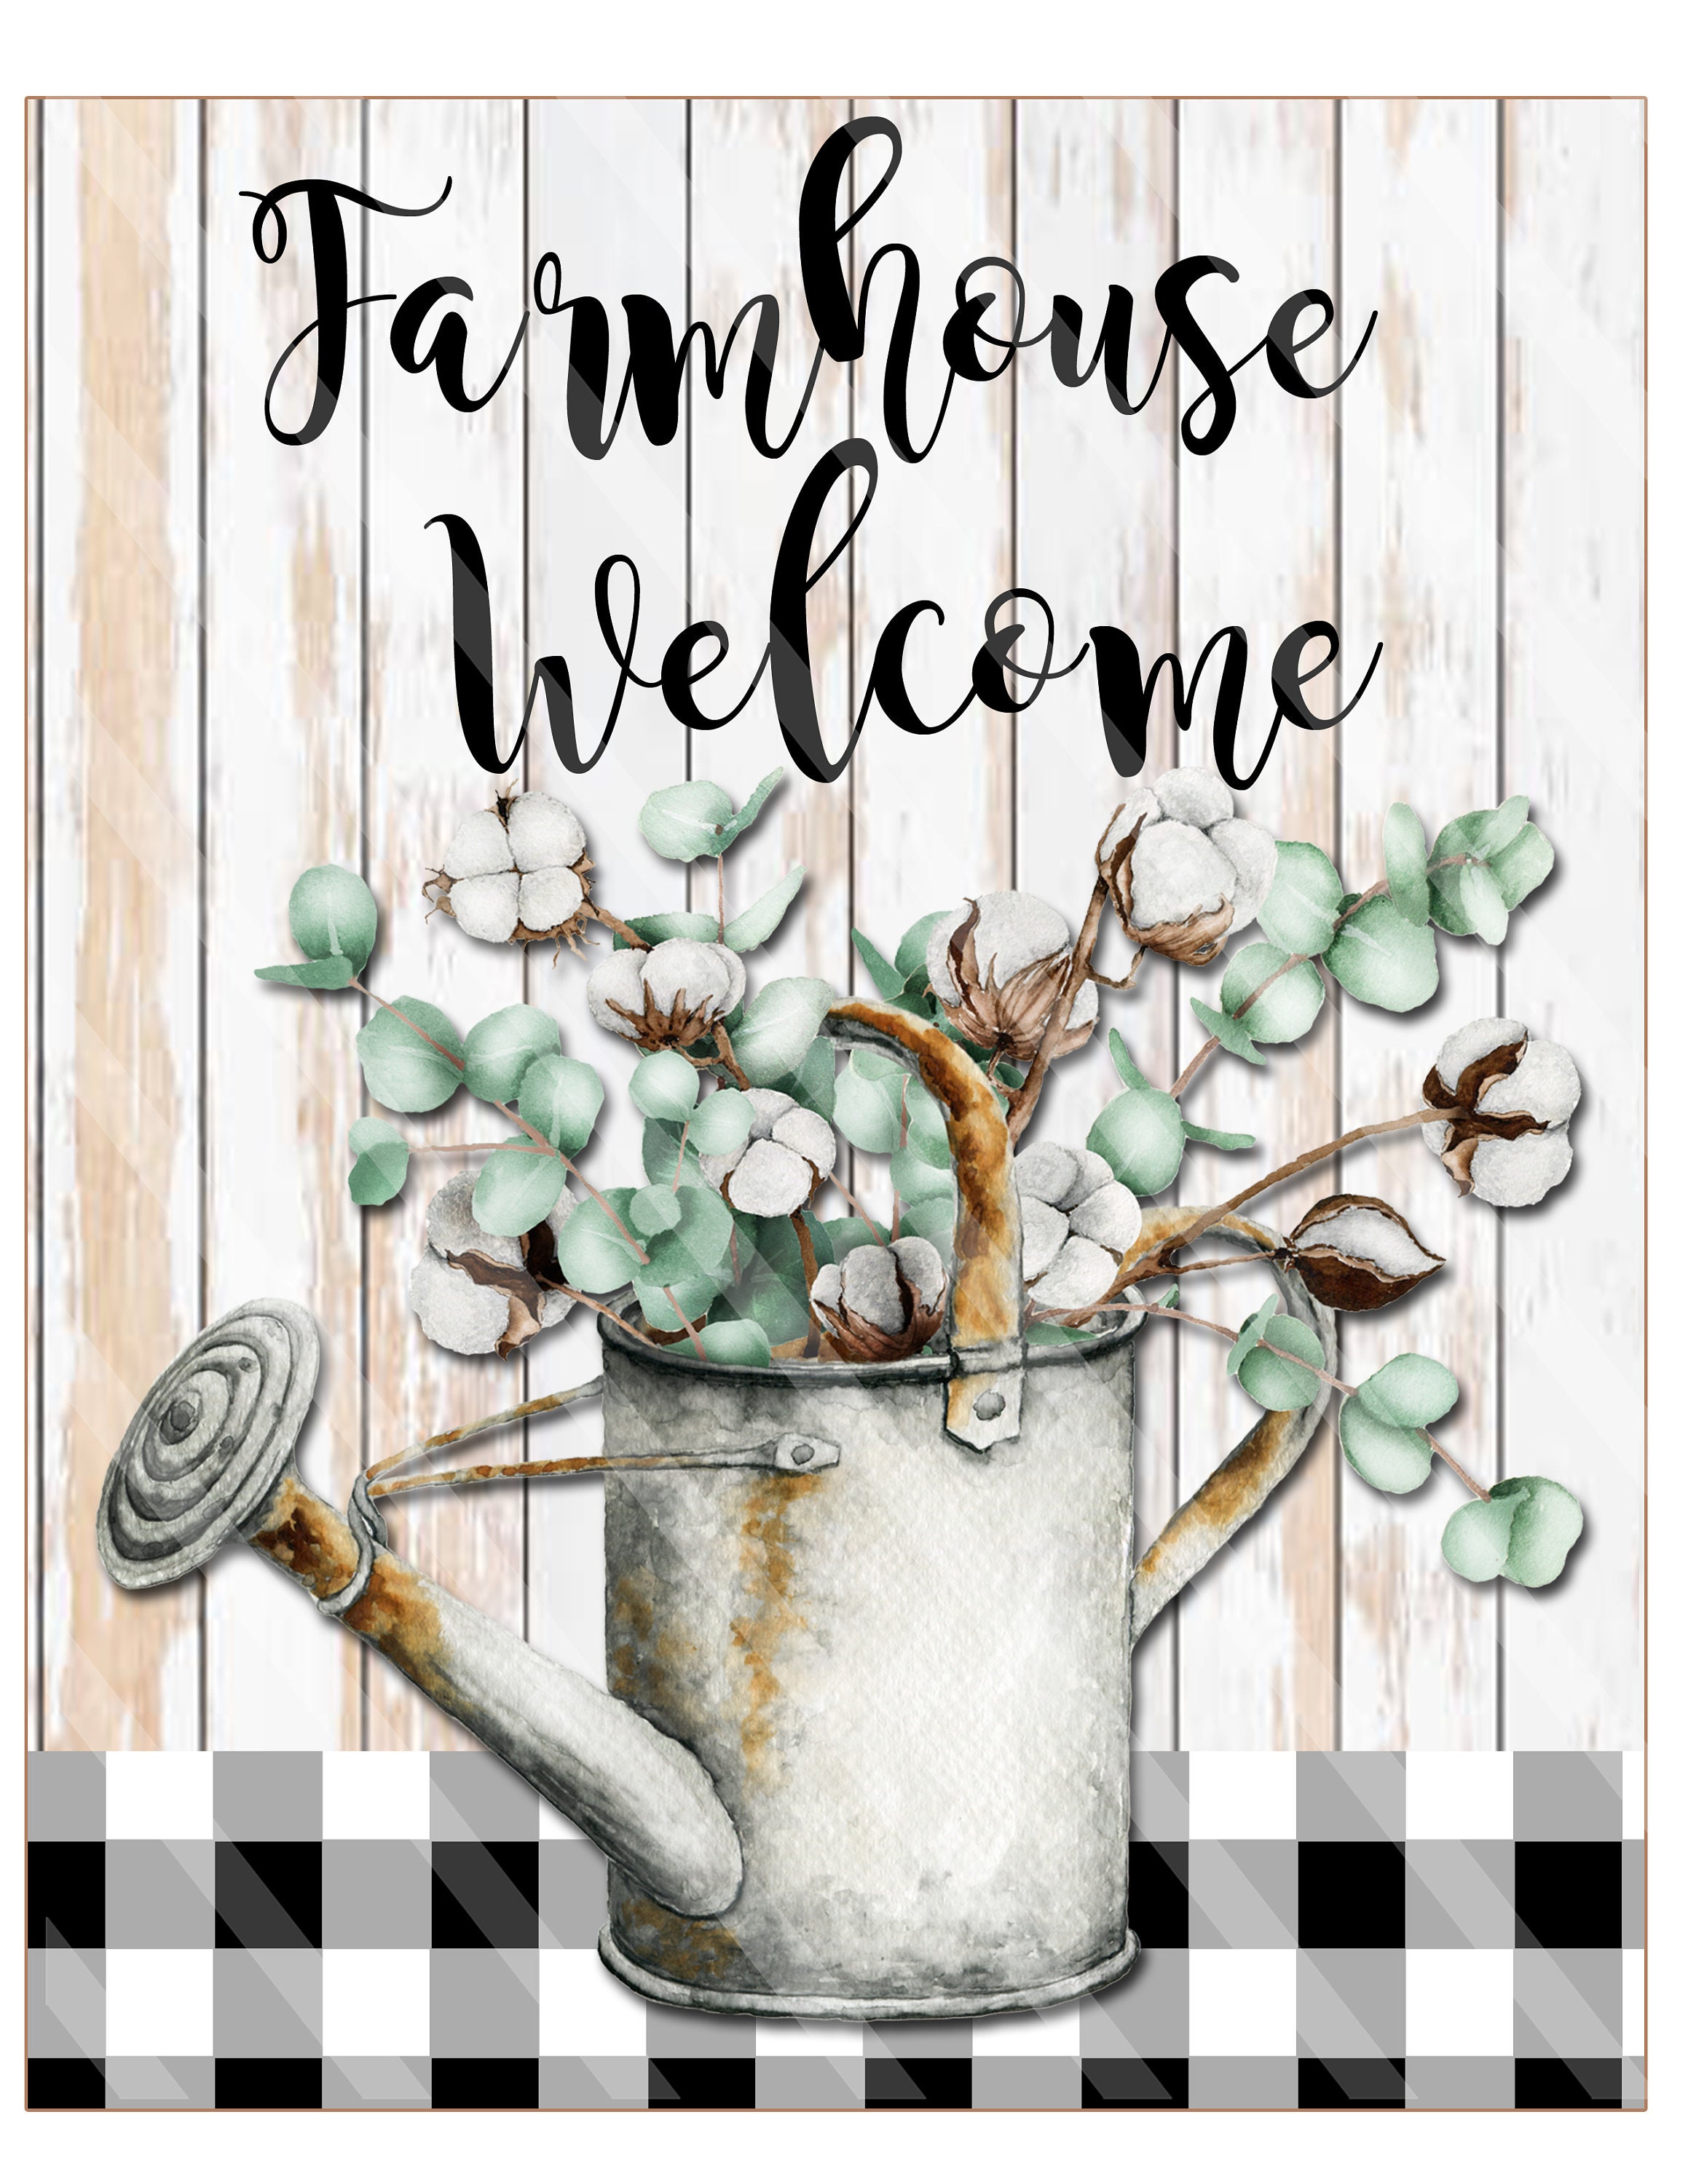 Farmhouse Printable Wall Art, Farmhouse Welcome, Watering Can